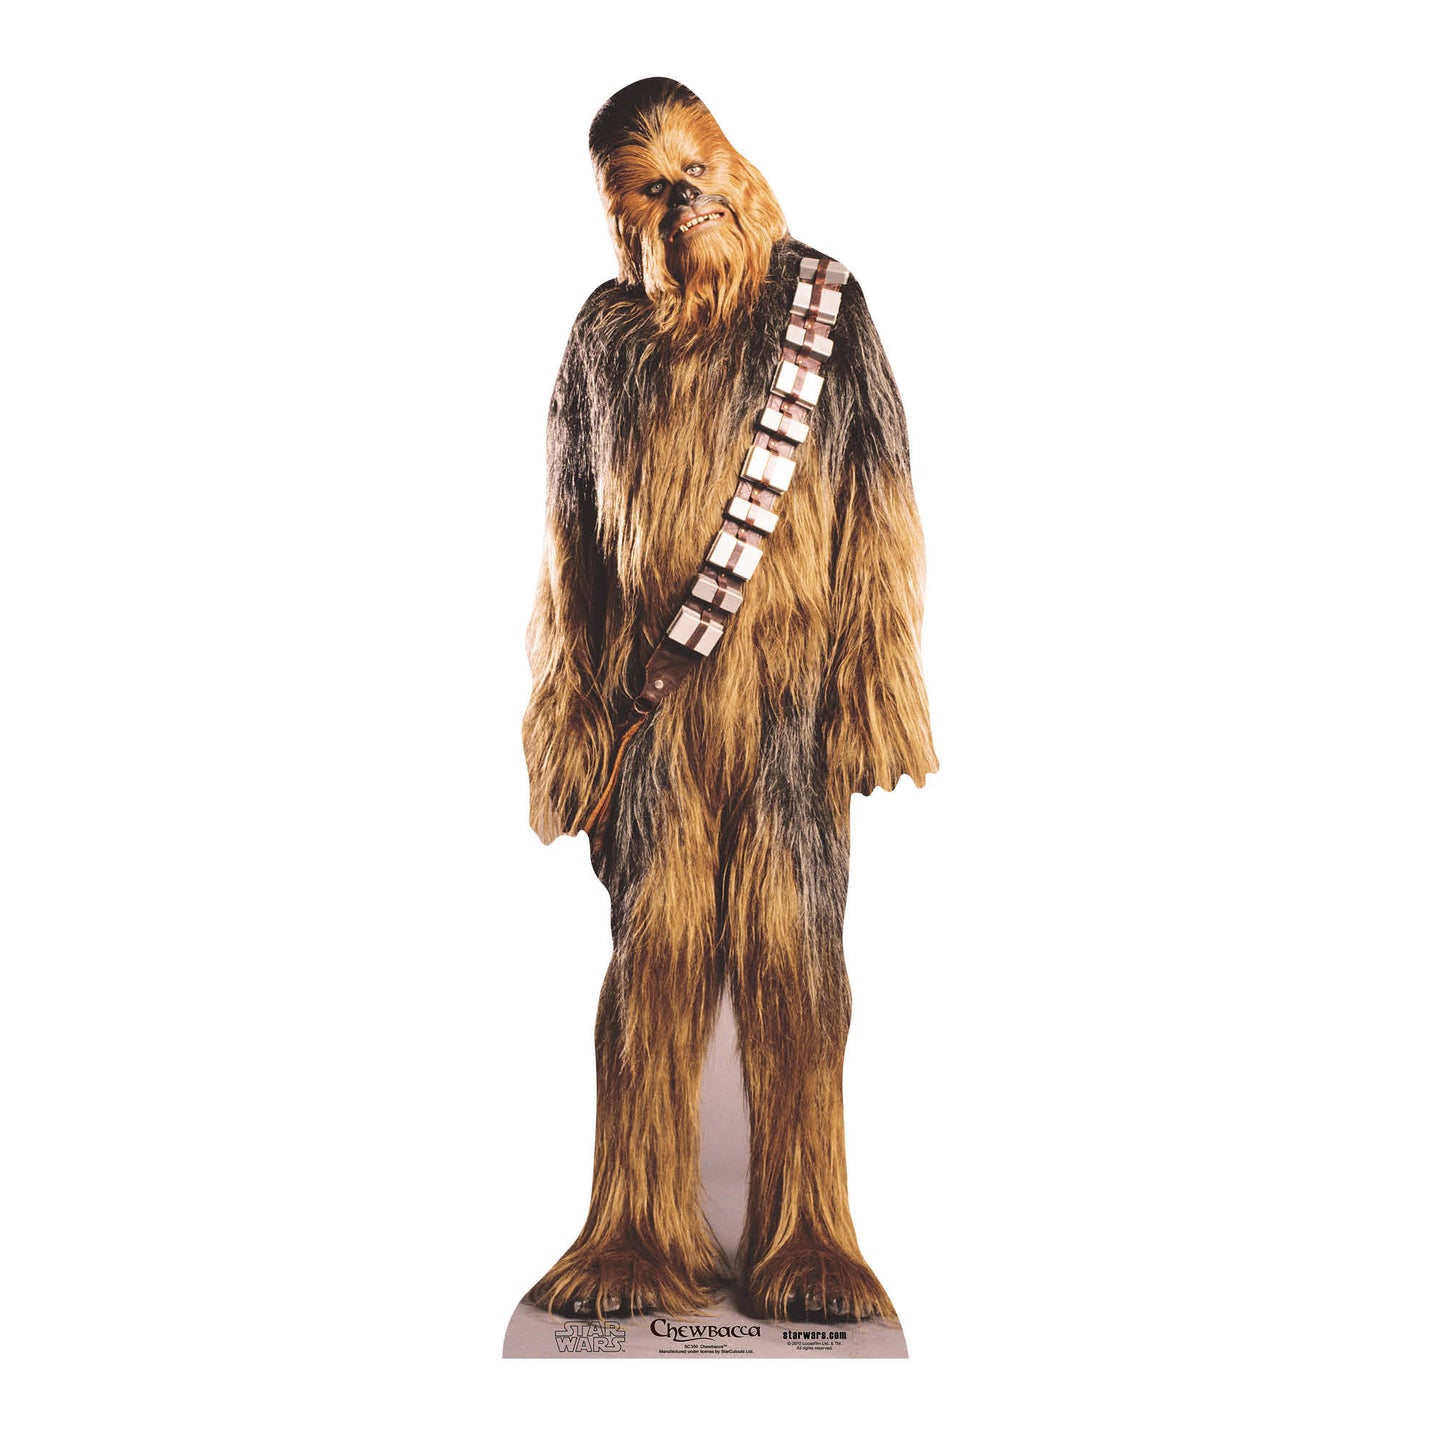 Chewbacca Star Wars Cardboard Cutout